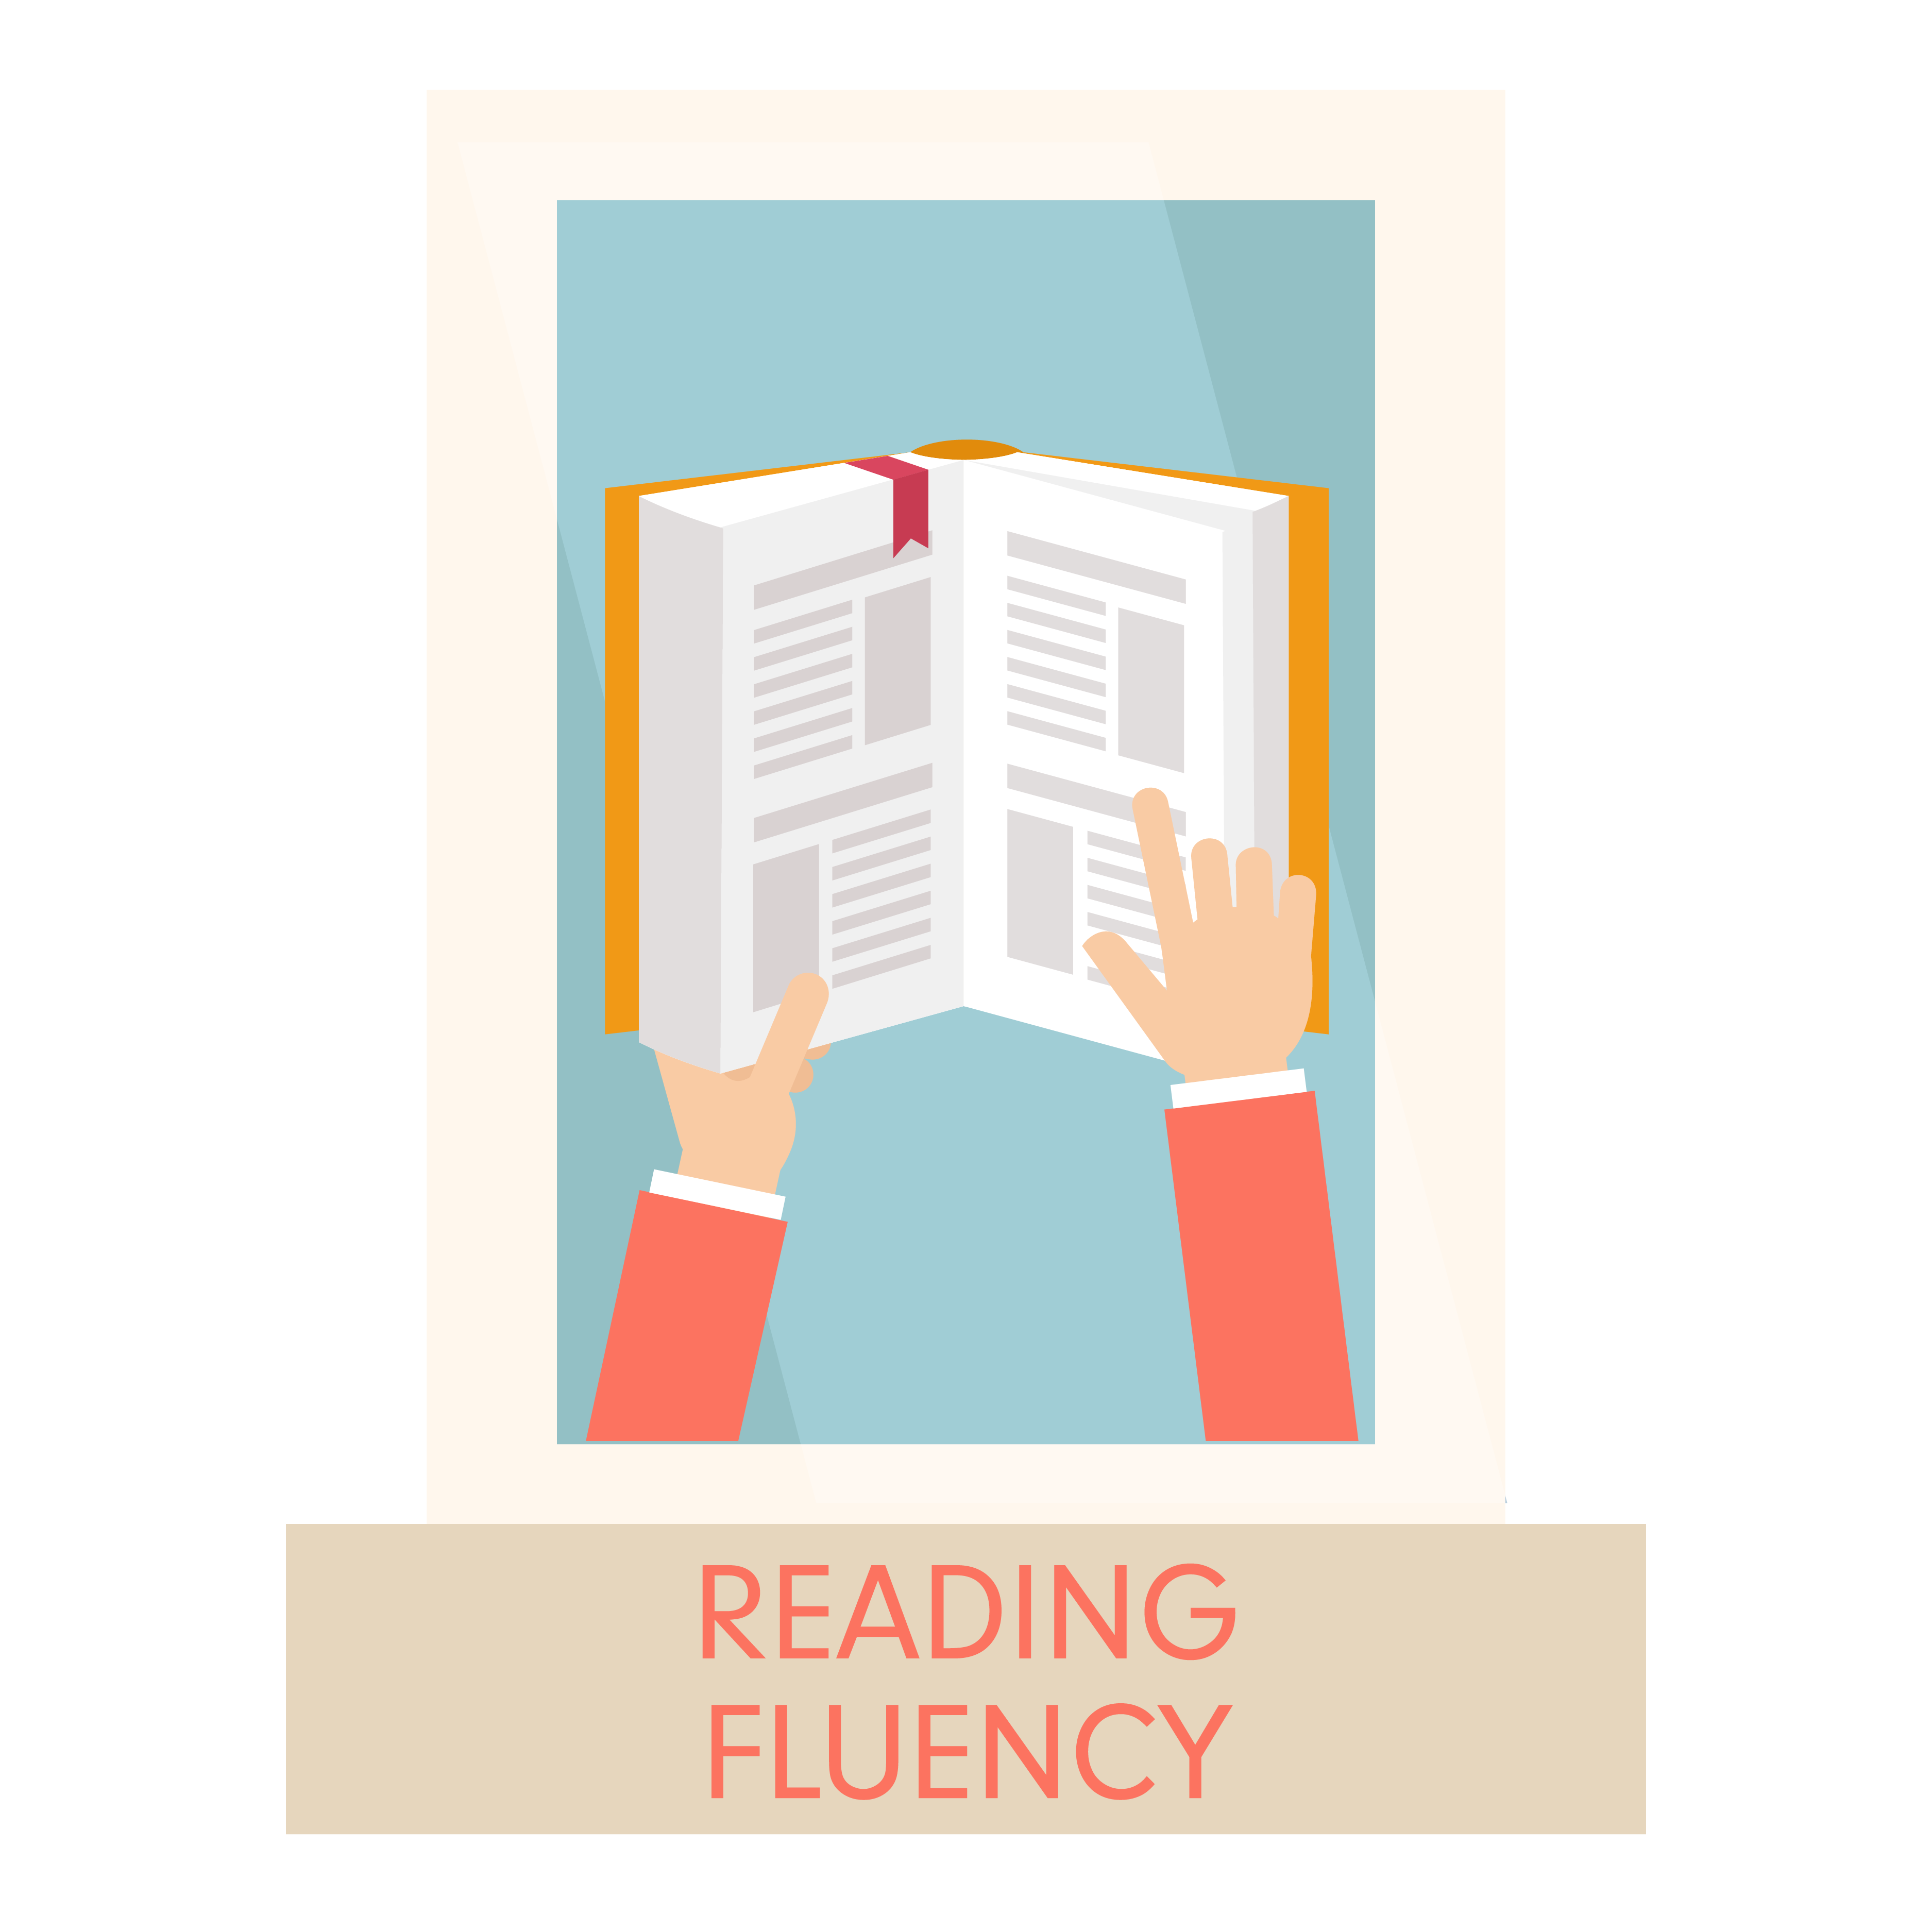 READING fluency